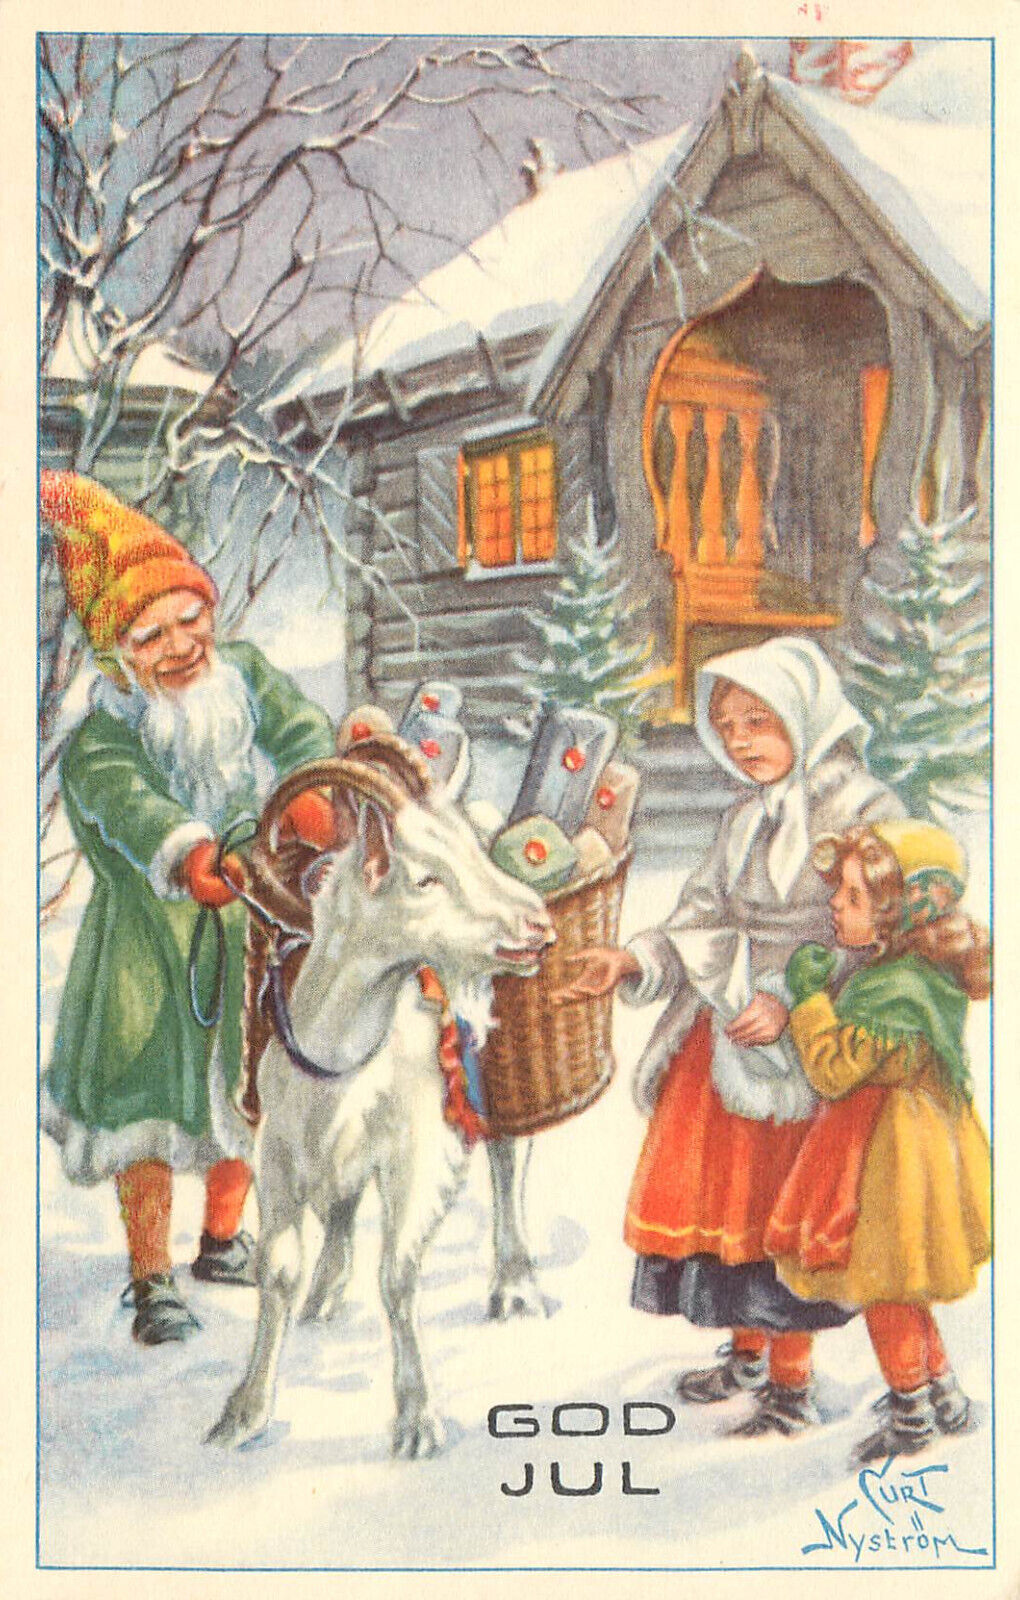 God Yul Swedish Christmas Postcard Curt Nystrom Gnome Santa Brings Gifts by Goat